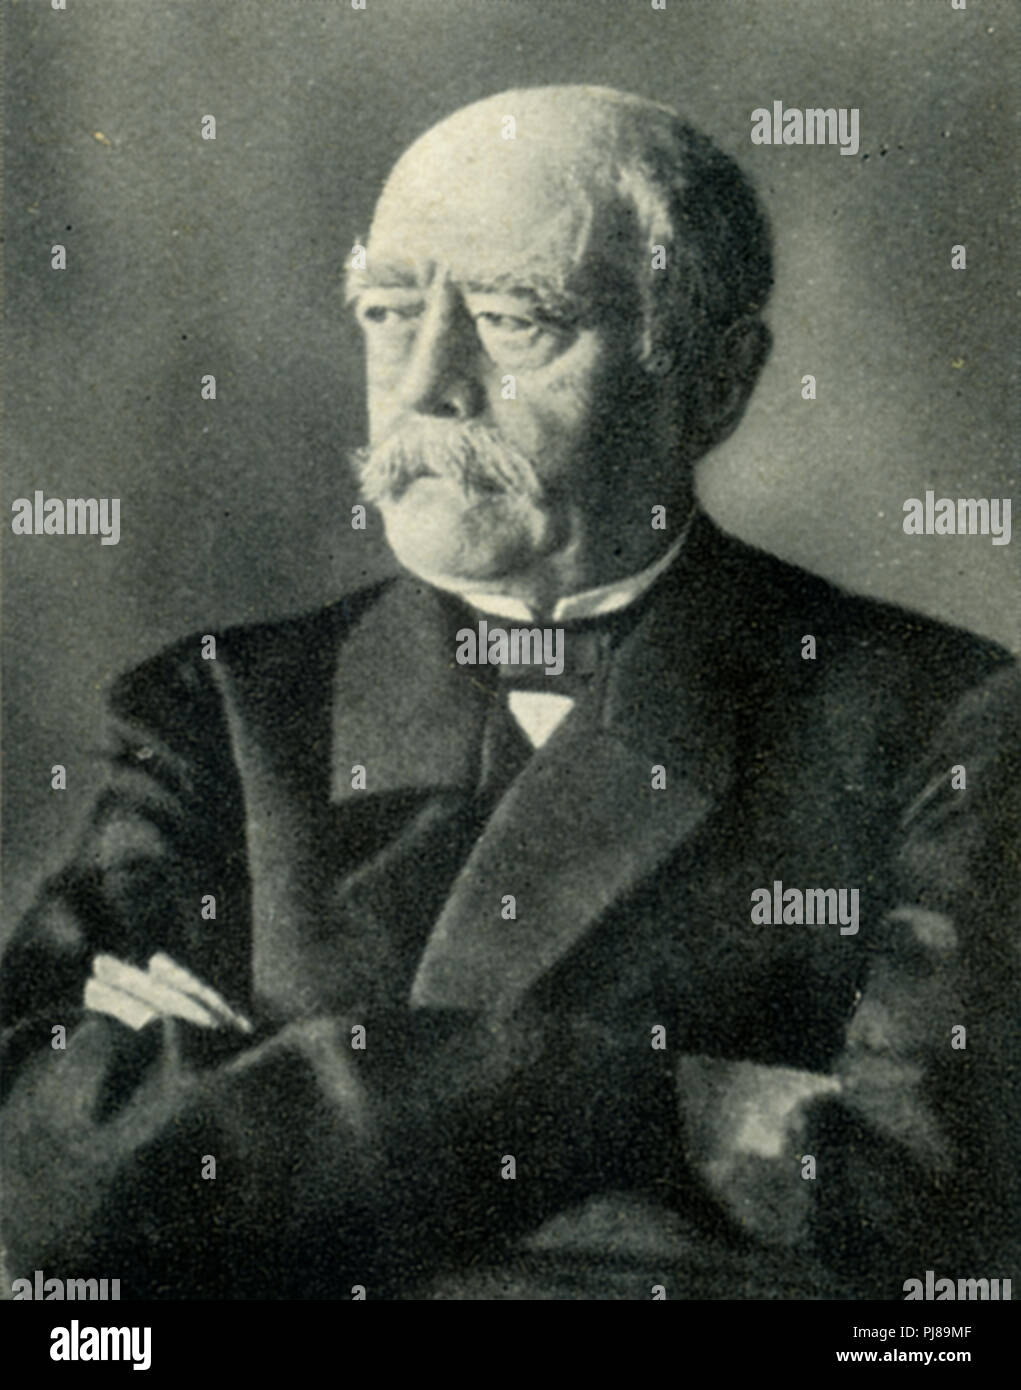 Bismarck Otto Von 1815 18 German Politician And Statesman Stock Photo Alamy